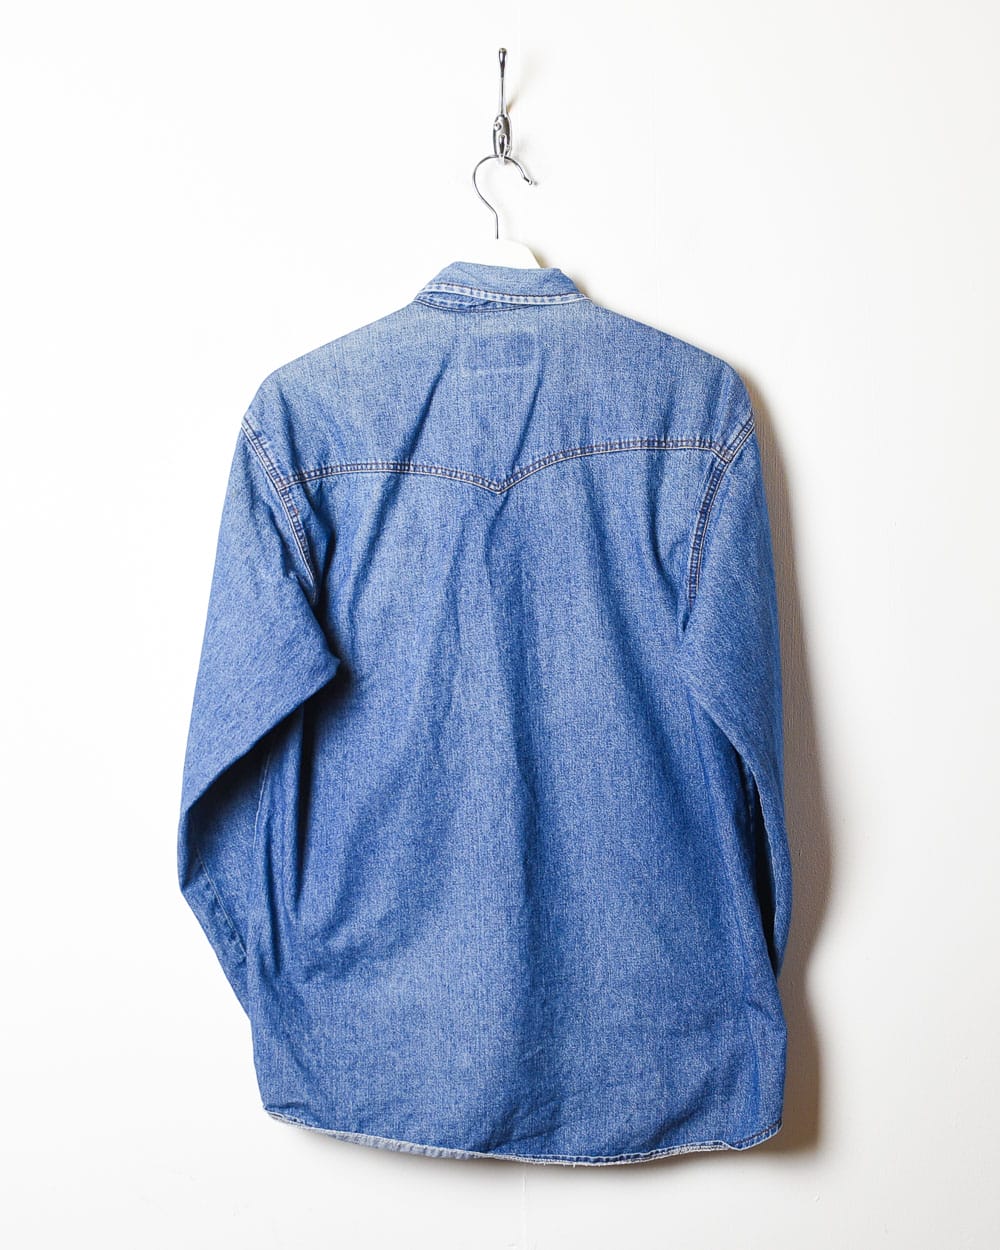 Blue Levi's Denim Shirt - Small